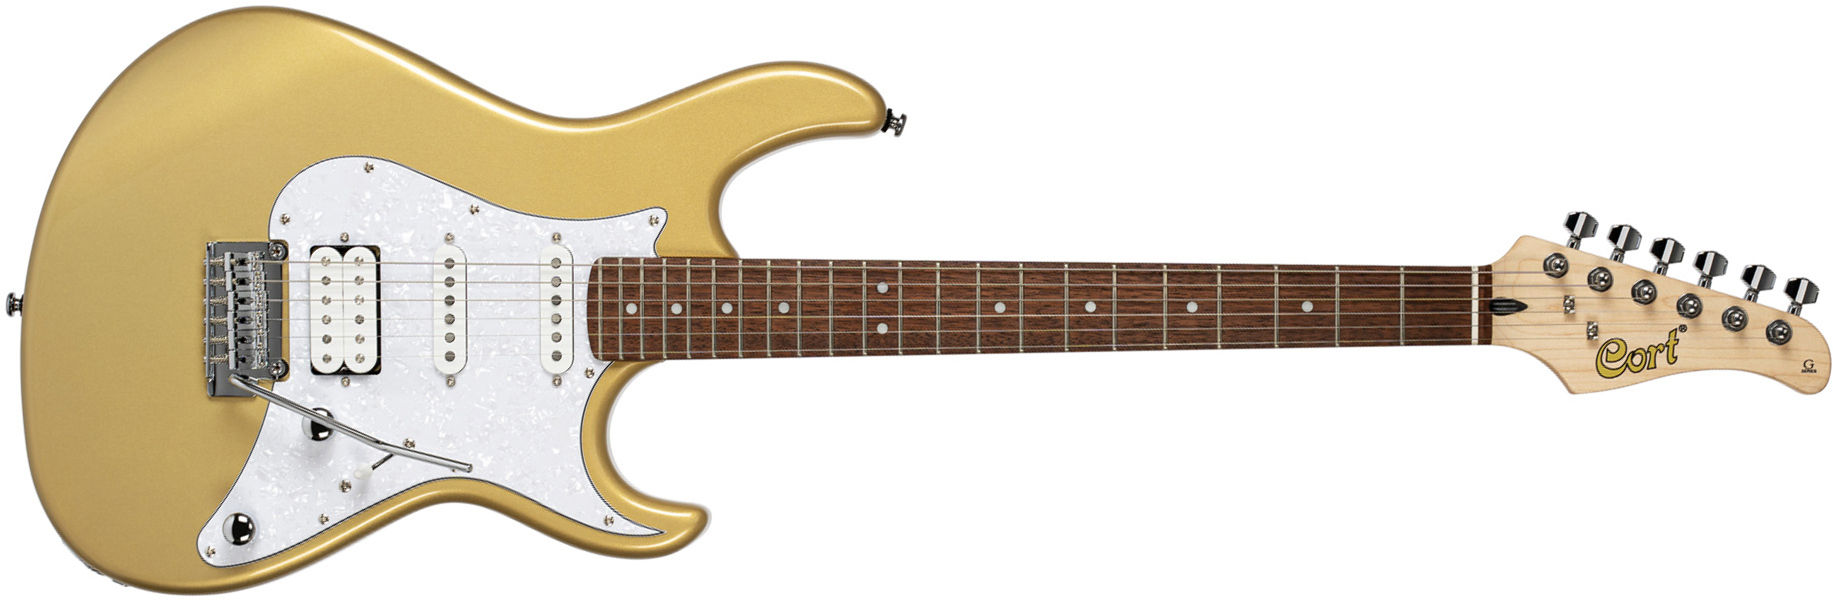 Cort G250 Svm Hss Trem Jat - Champagne Gold Metallic - Str shape electric guitar - Main picture